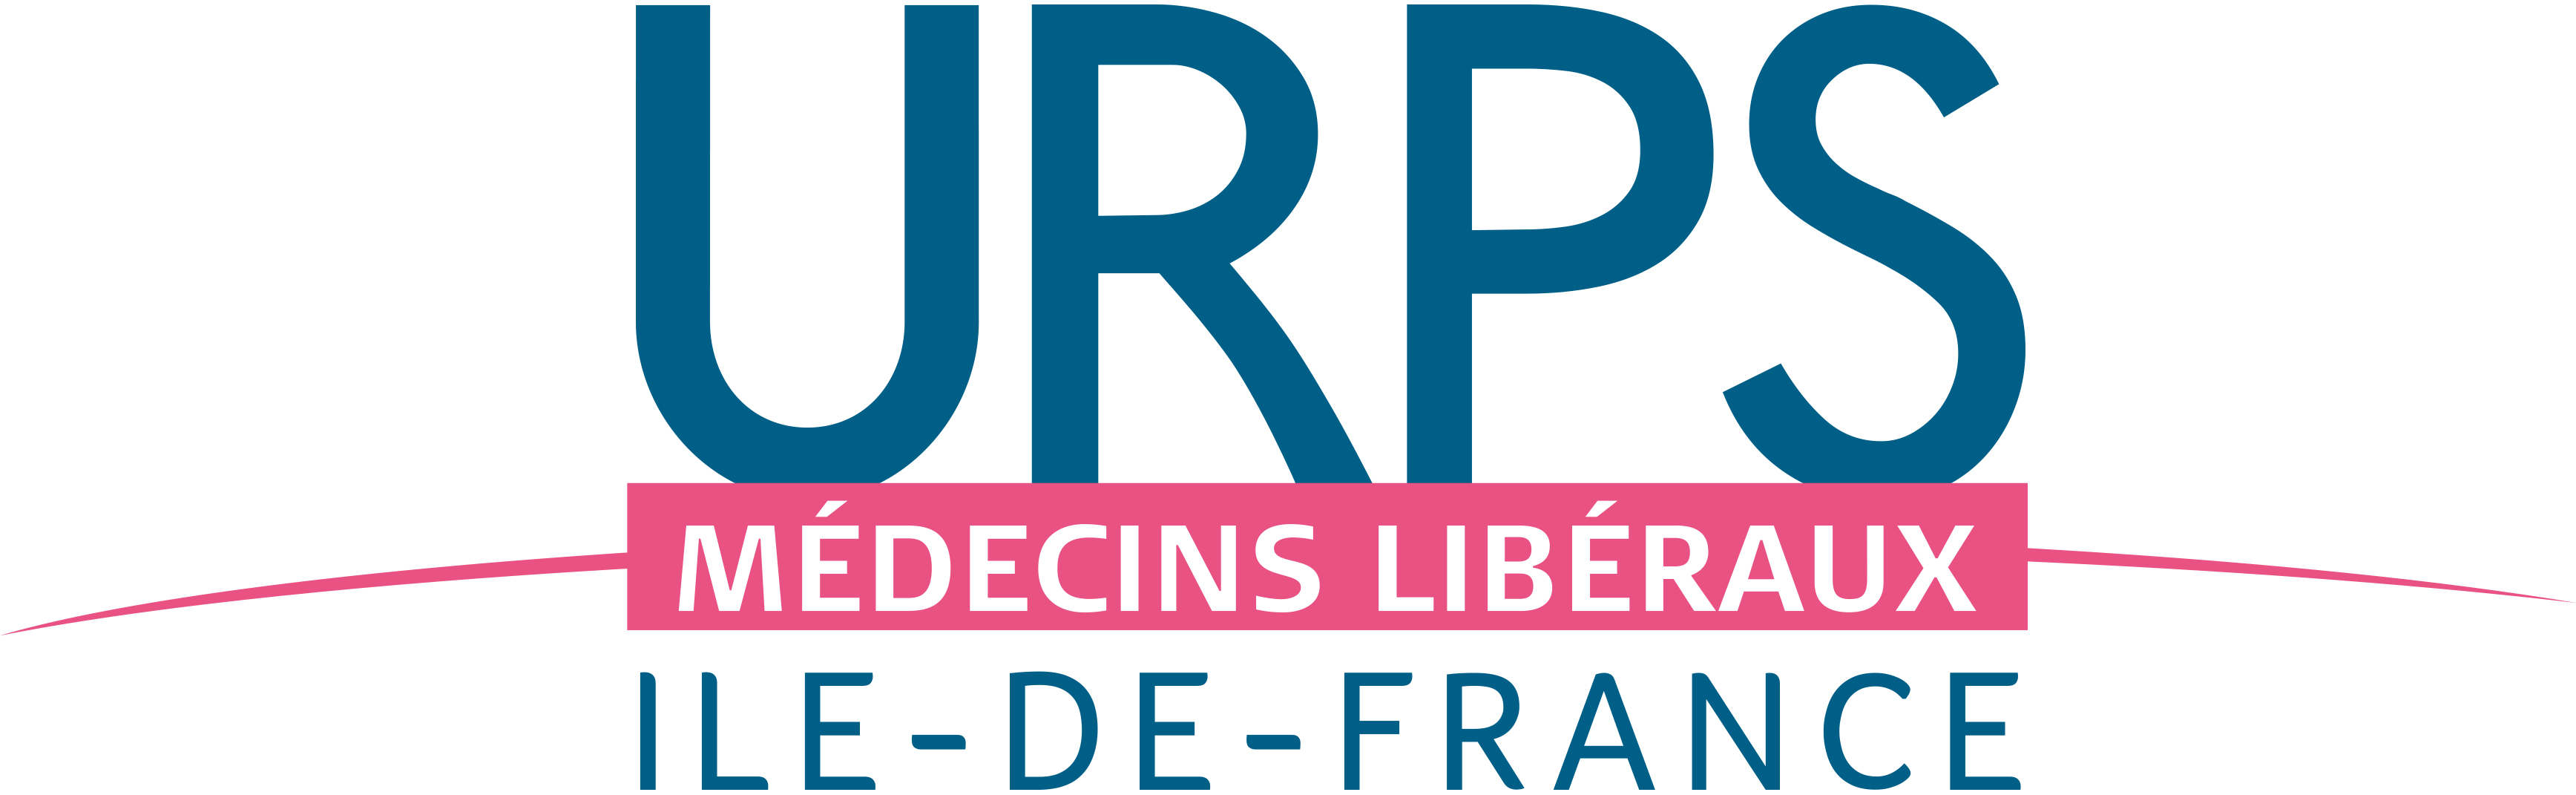 URPS MEDECINS LIBERAUX ILE-DE-FRANCE